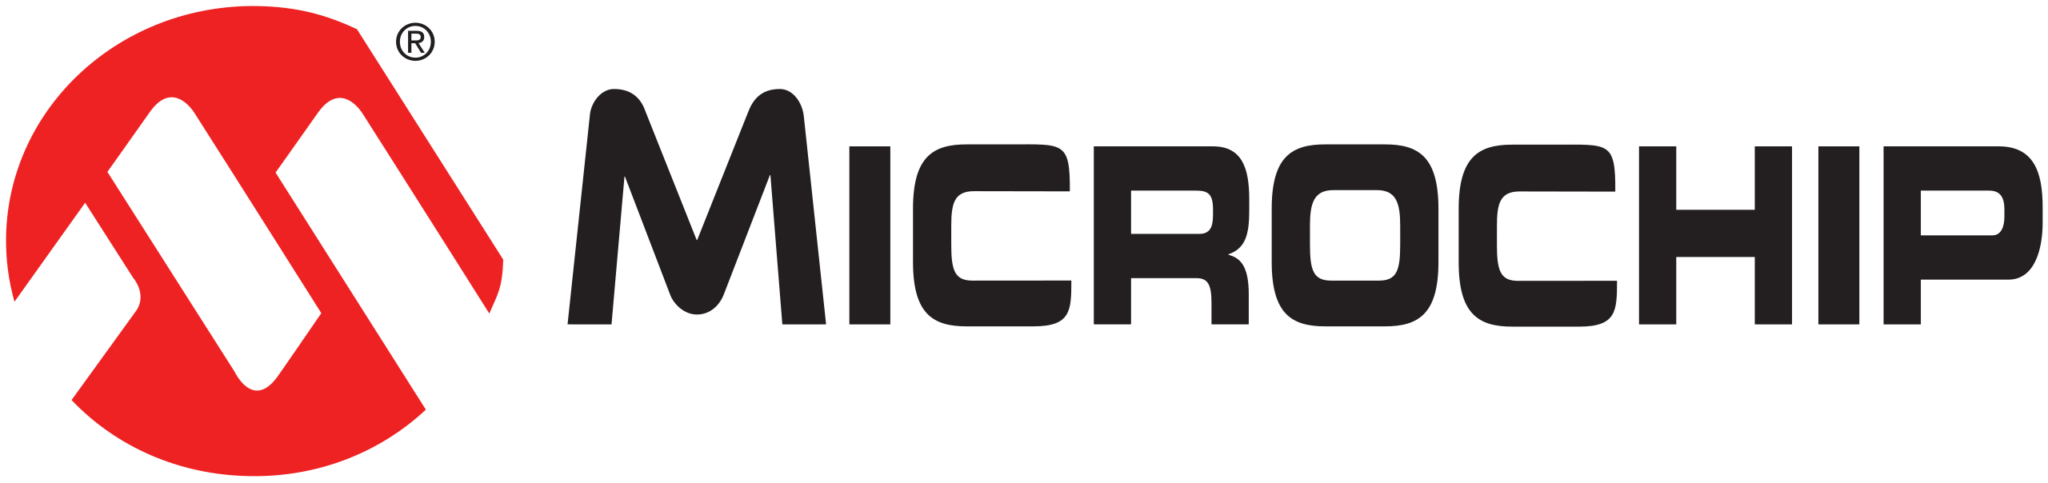 Microchip - General Sponsor